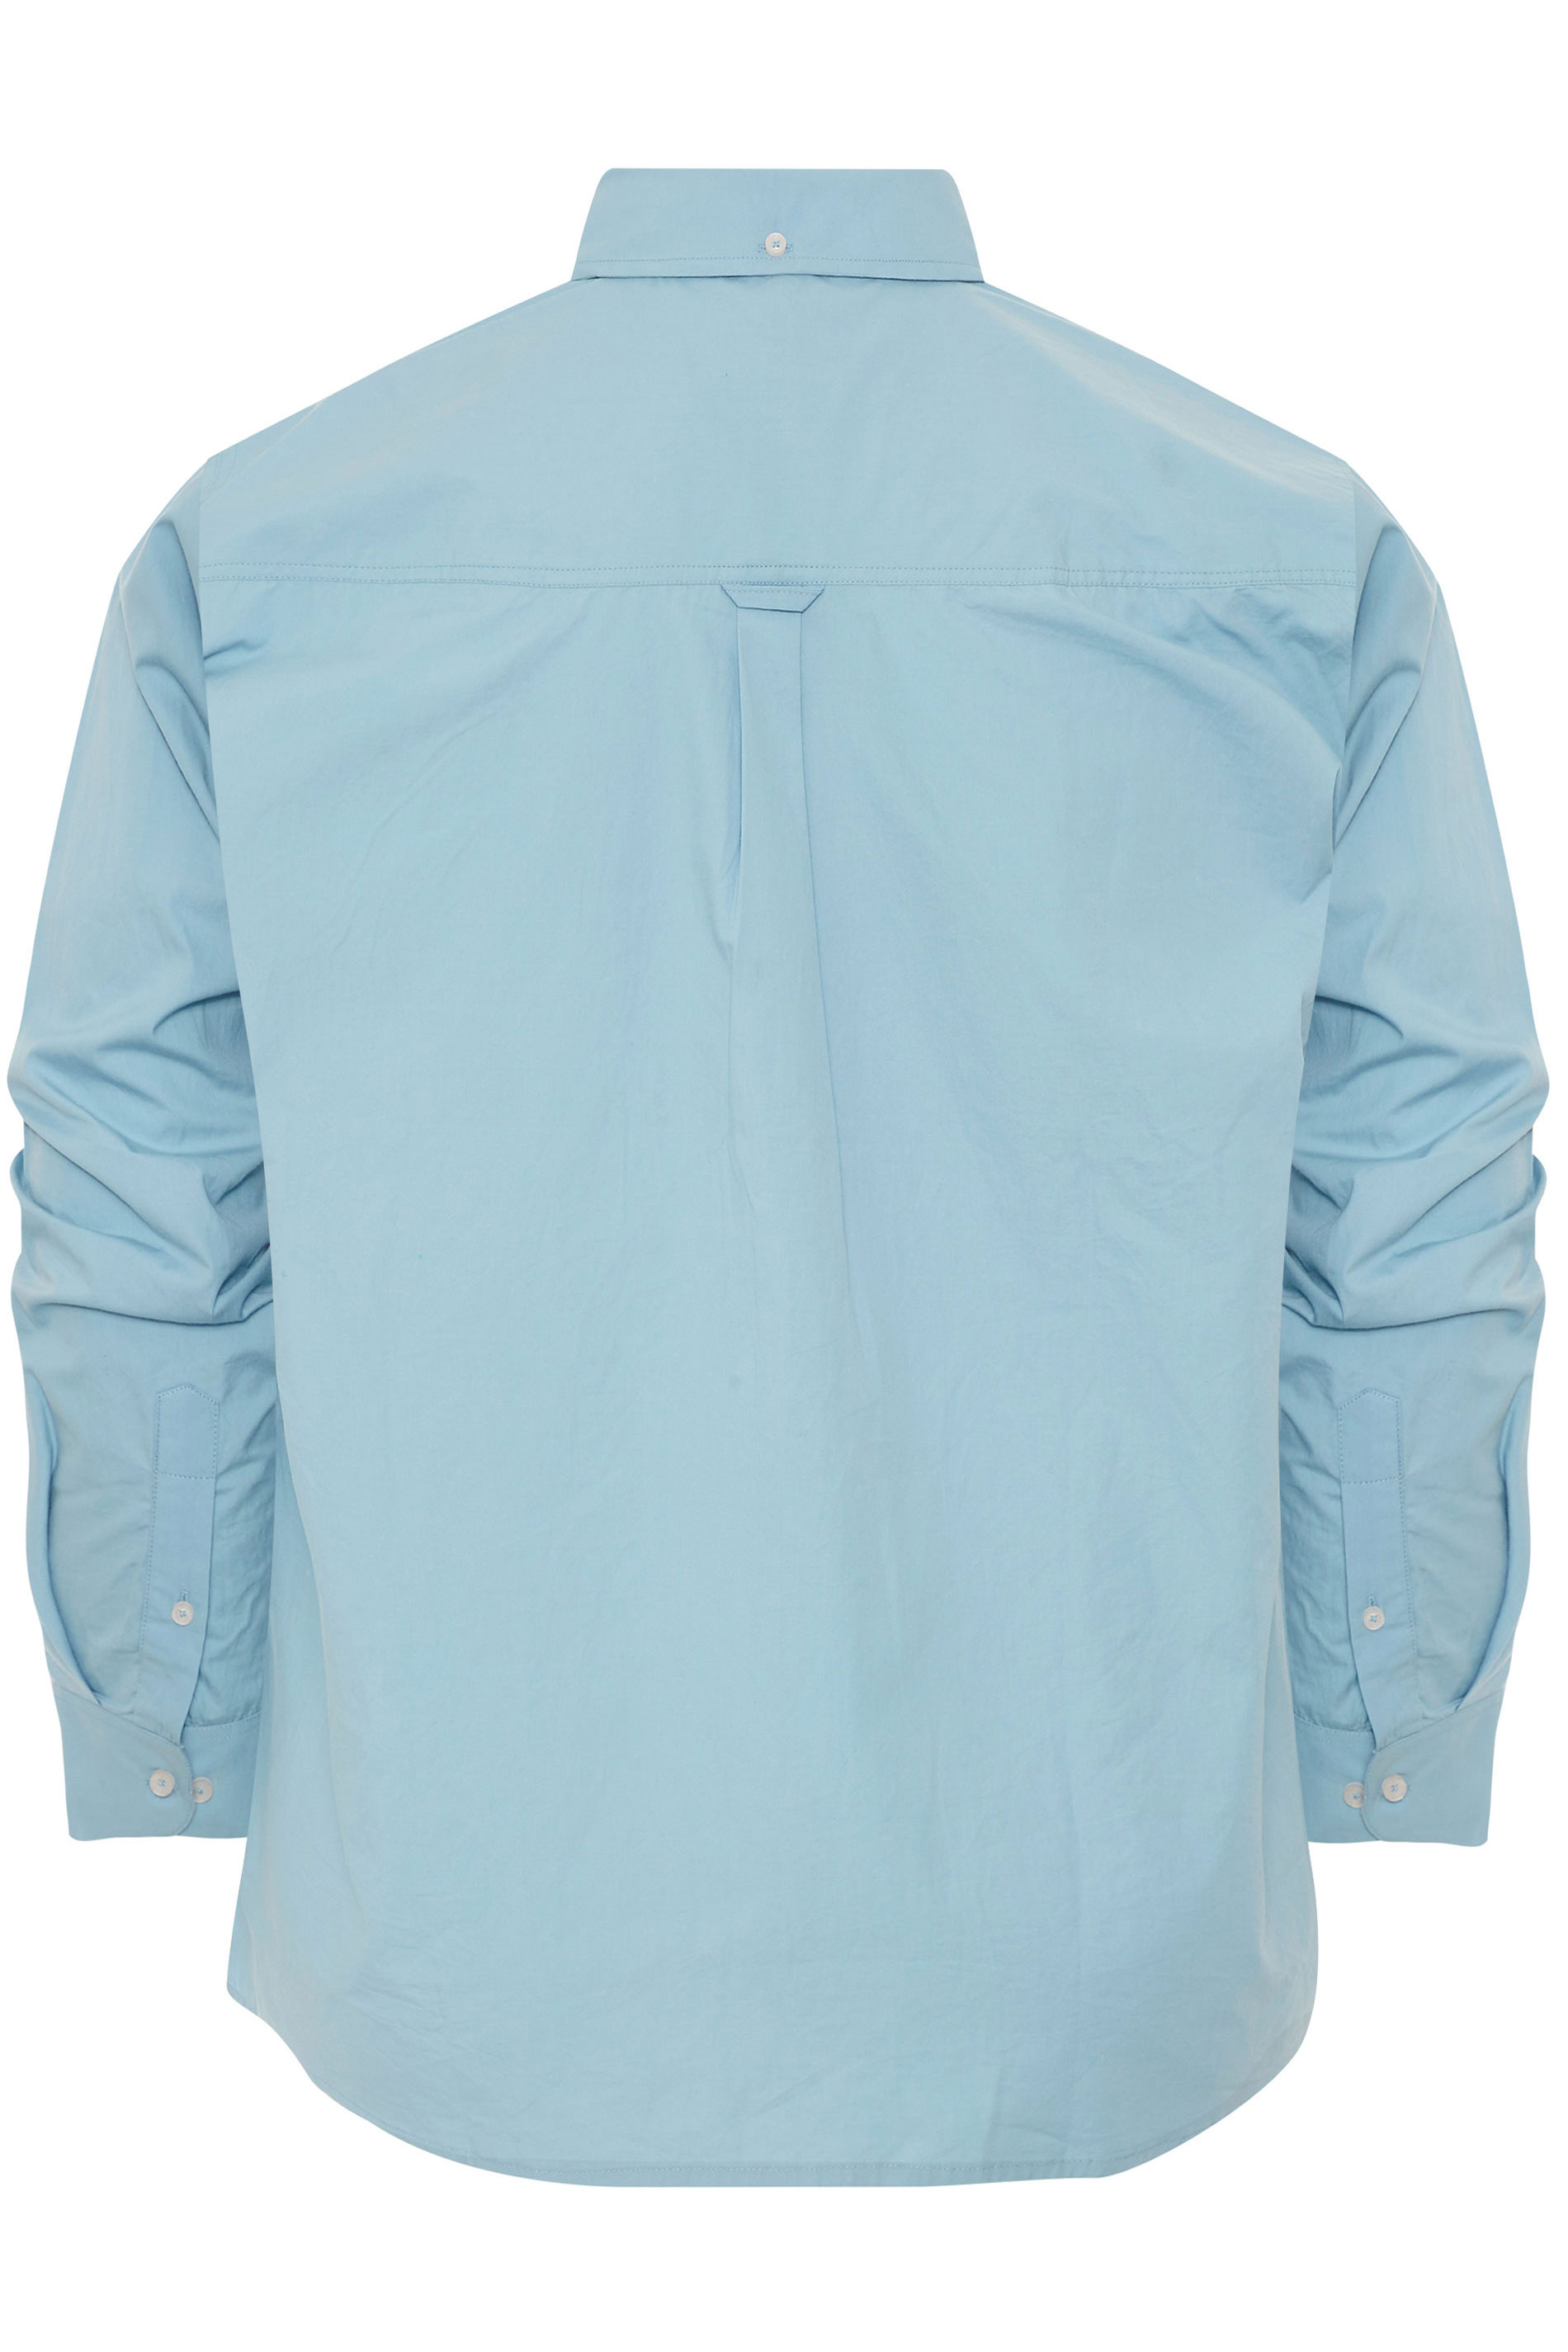 BadRhino Big & Tall Light Blue Poplin Long Sleeve Shirt | BadRhino 3